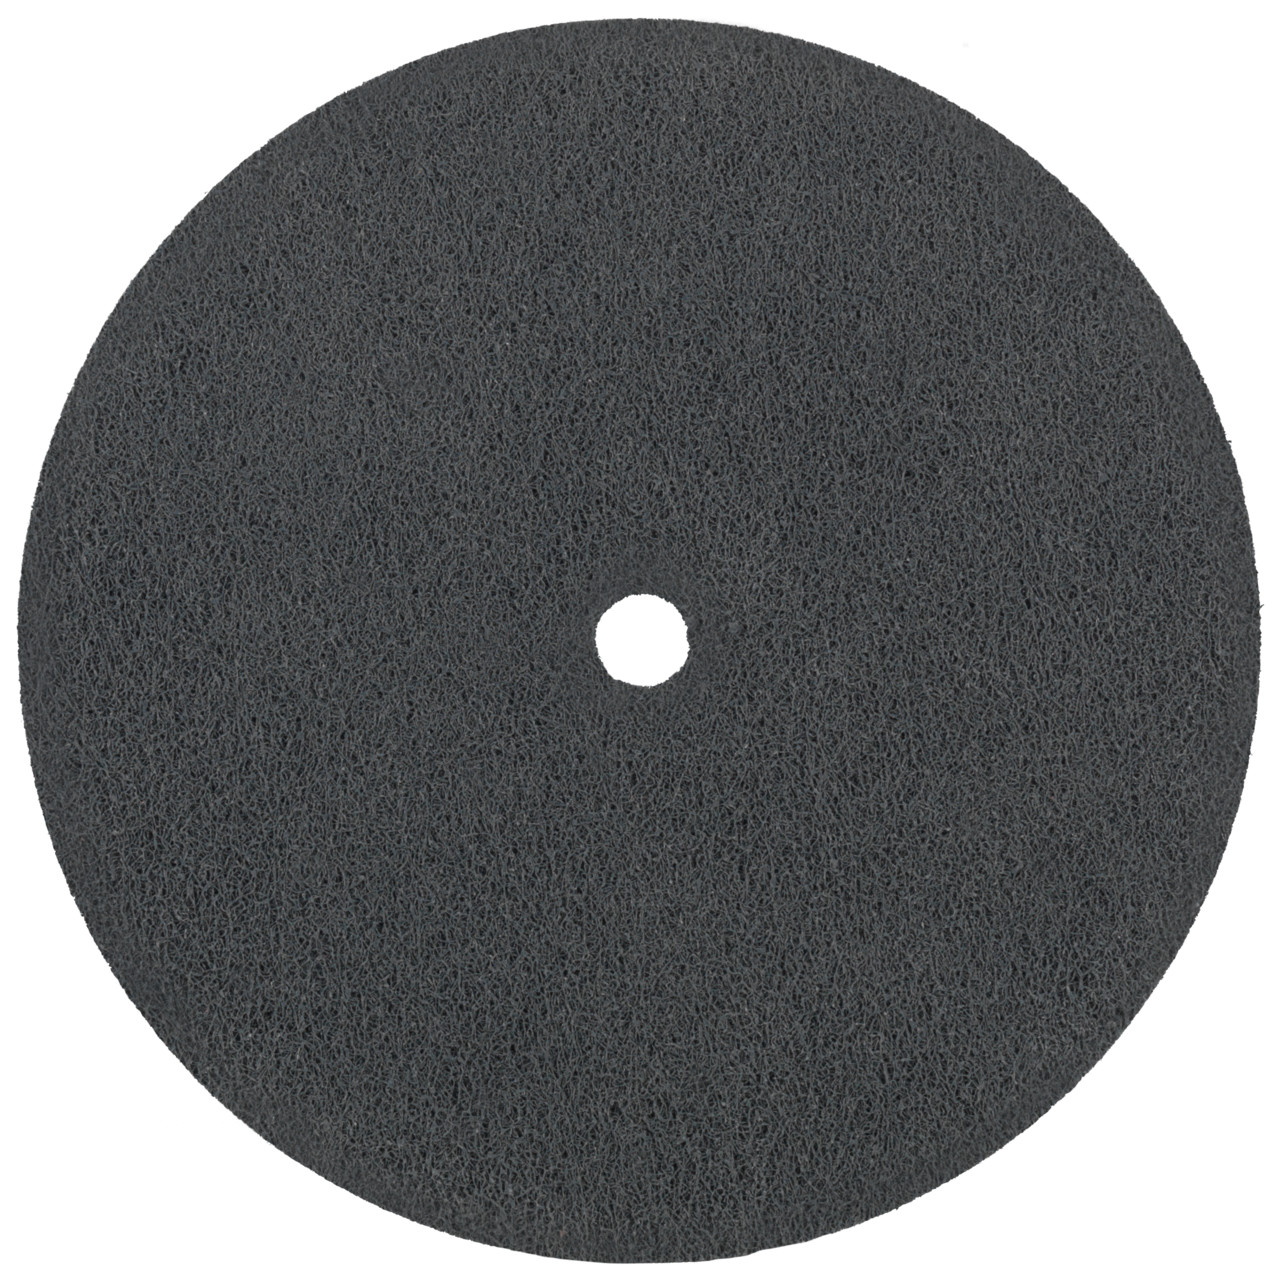 Tyrolit Compact disc pressati DxDxH 152x25x25.4 Inserto universale, 6 A MEDIUM, forma: 1, Art. 34190308